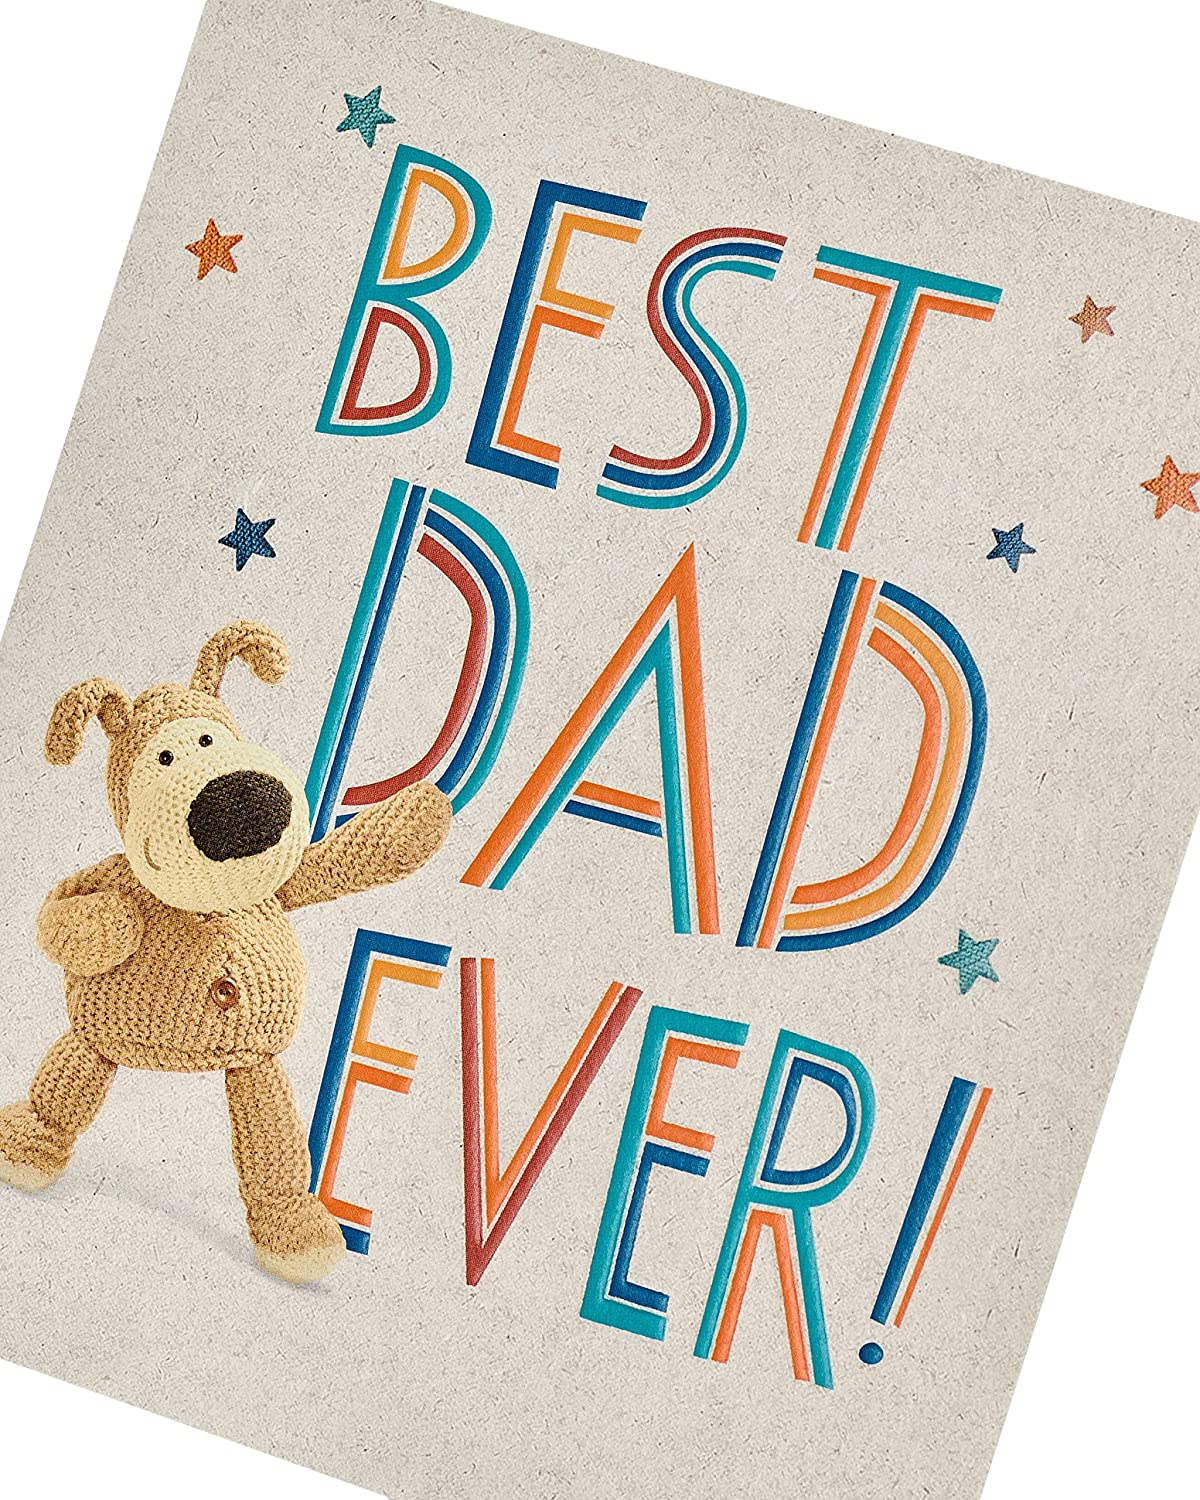 Boofle Best Dad Ever Birthday Card 